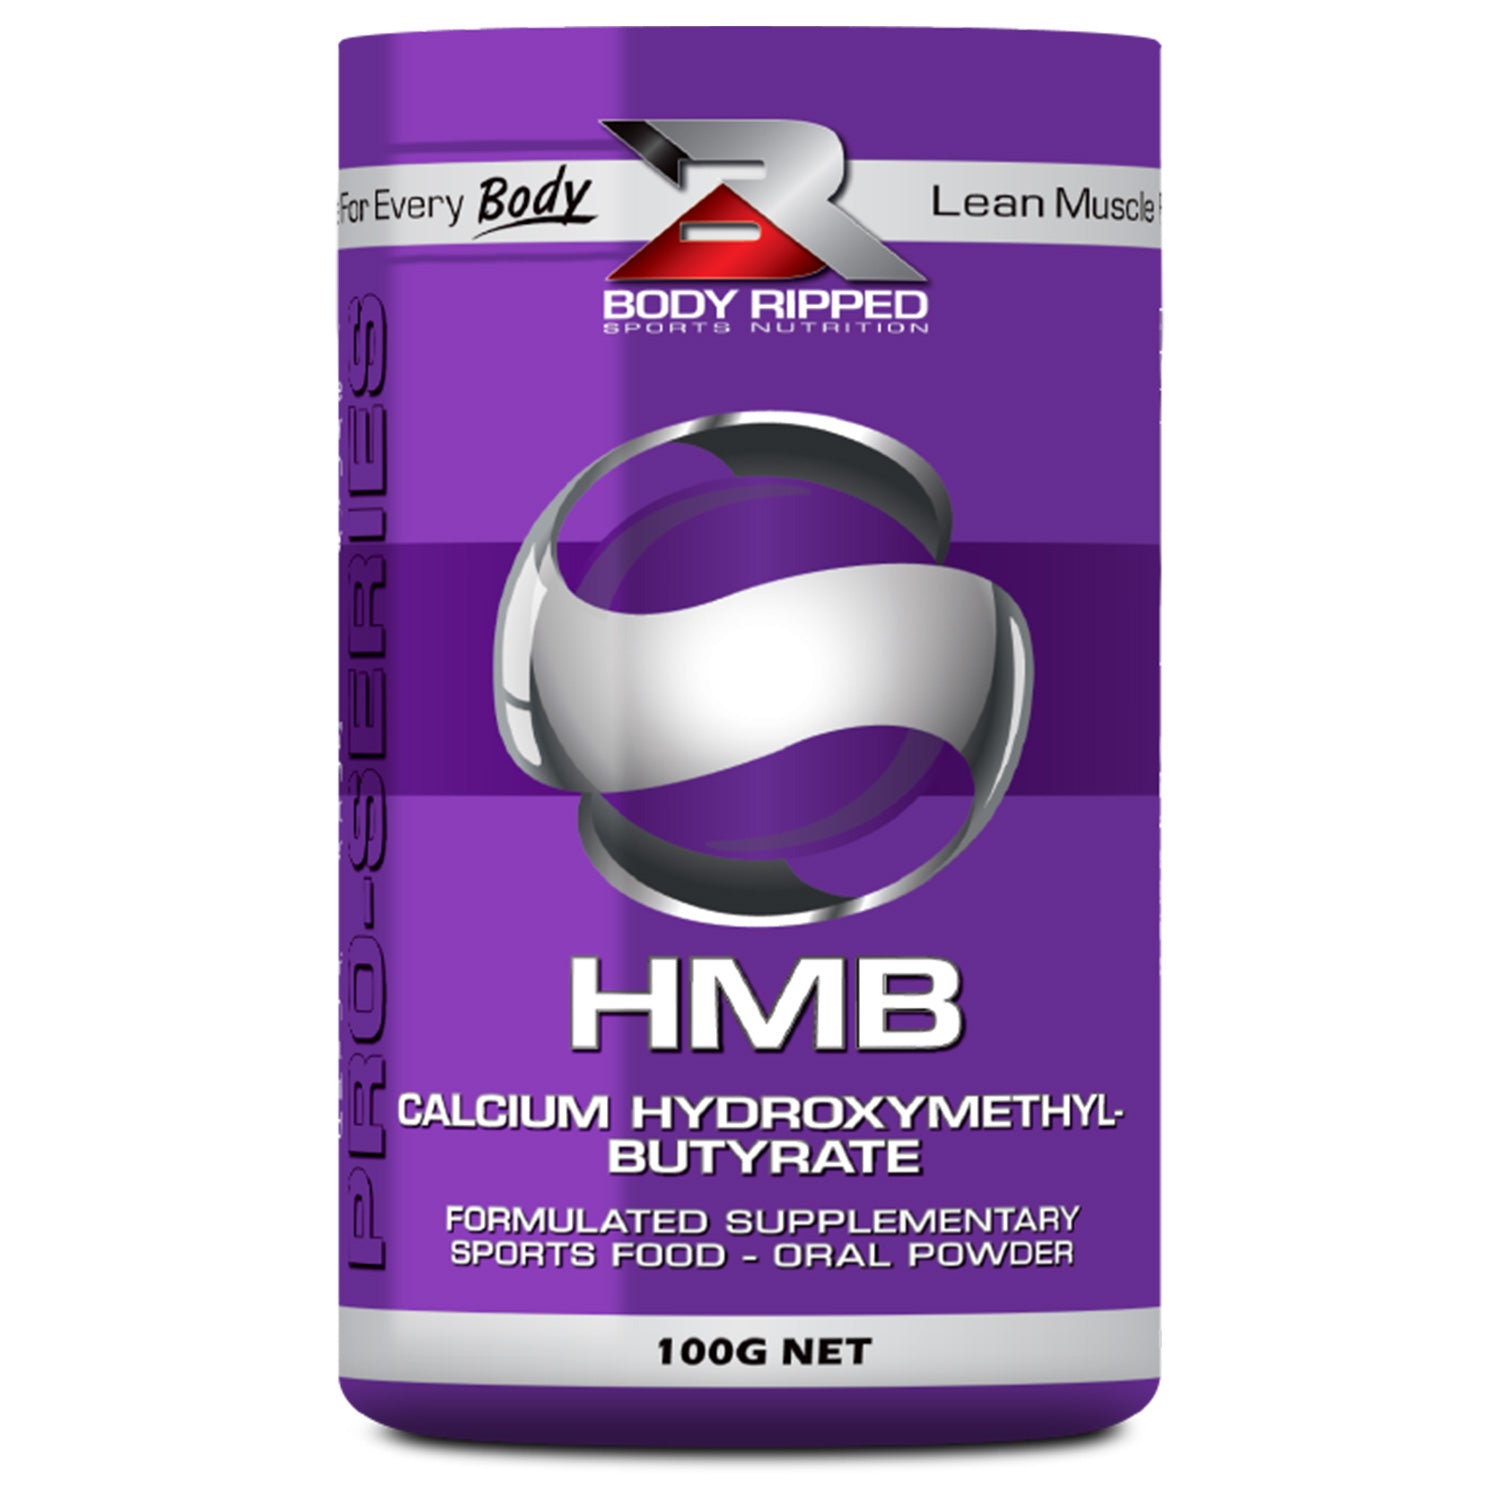 HMB - ï»¿Calcium Hydroxymethyl-Butyrate